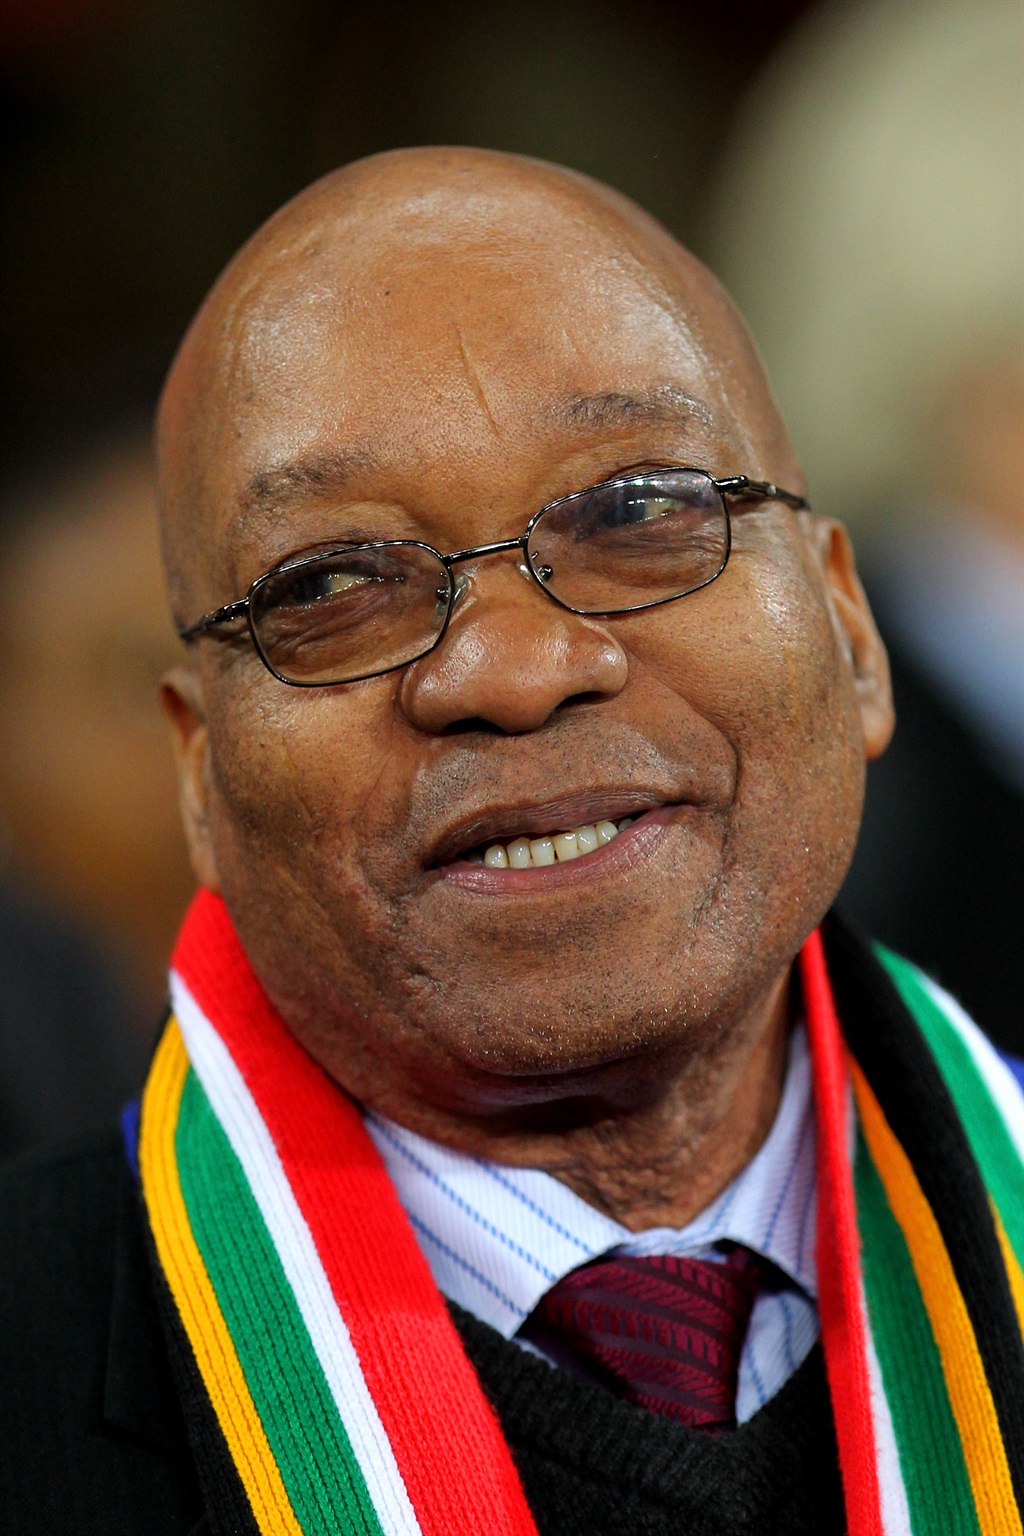 Former President Jacob Zuma. Photo by Doug Pensinger/Getty Images.